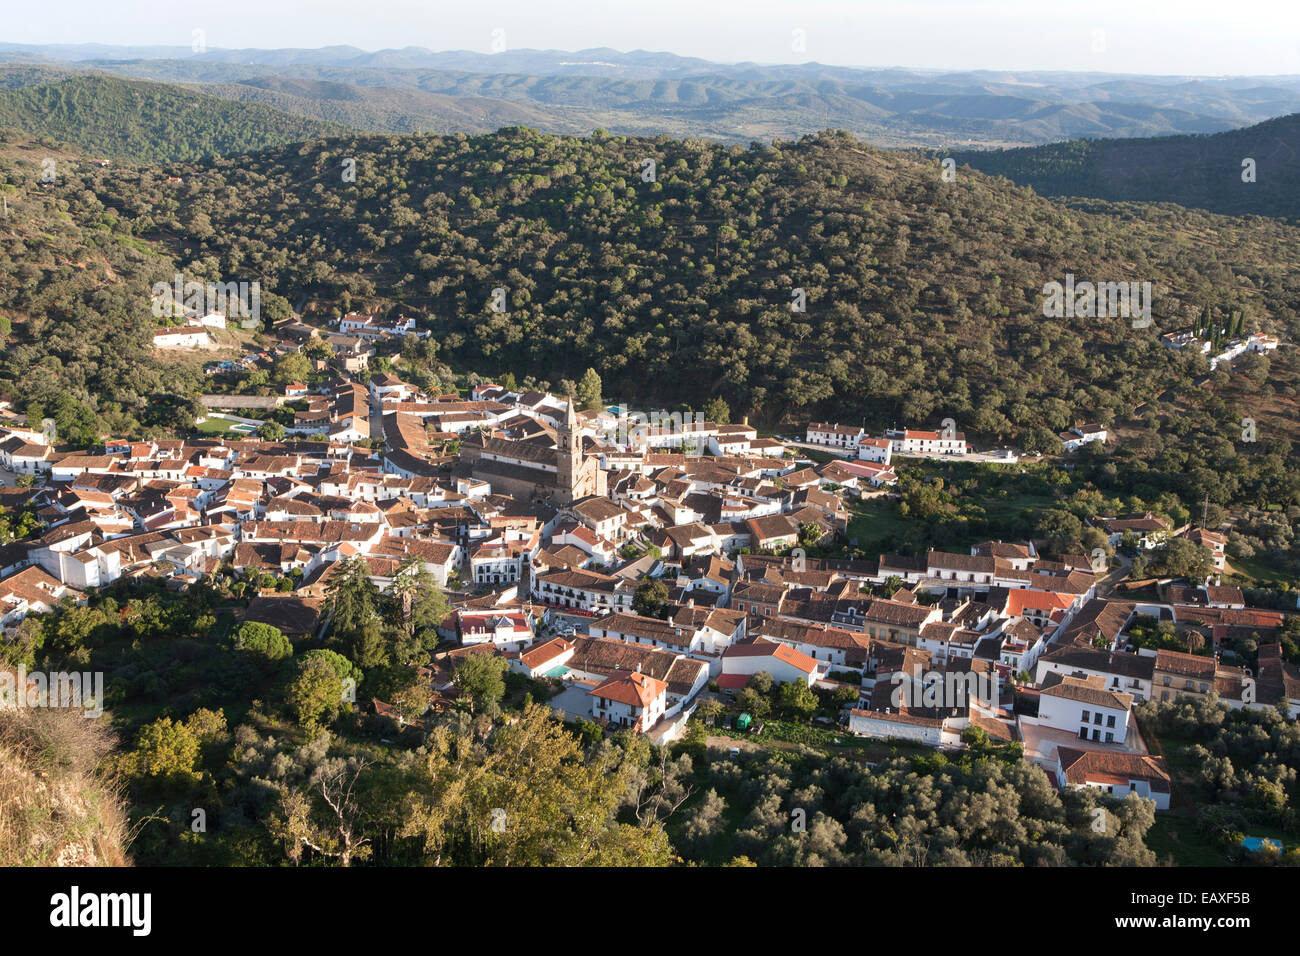 Obenliegende schrägen Winkel Ansicht des Dorfes Alajar, Sierra de Aracena, Provinz Huelva, Spanien Stockfoto